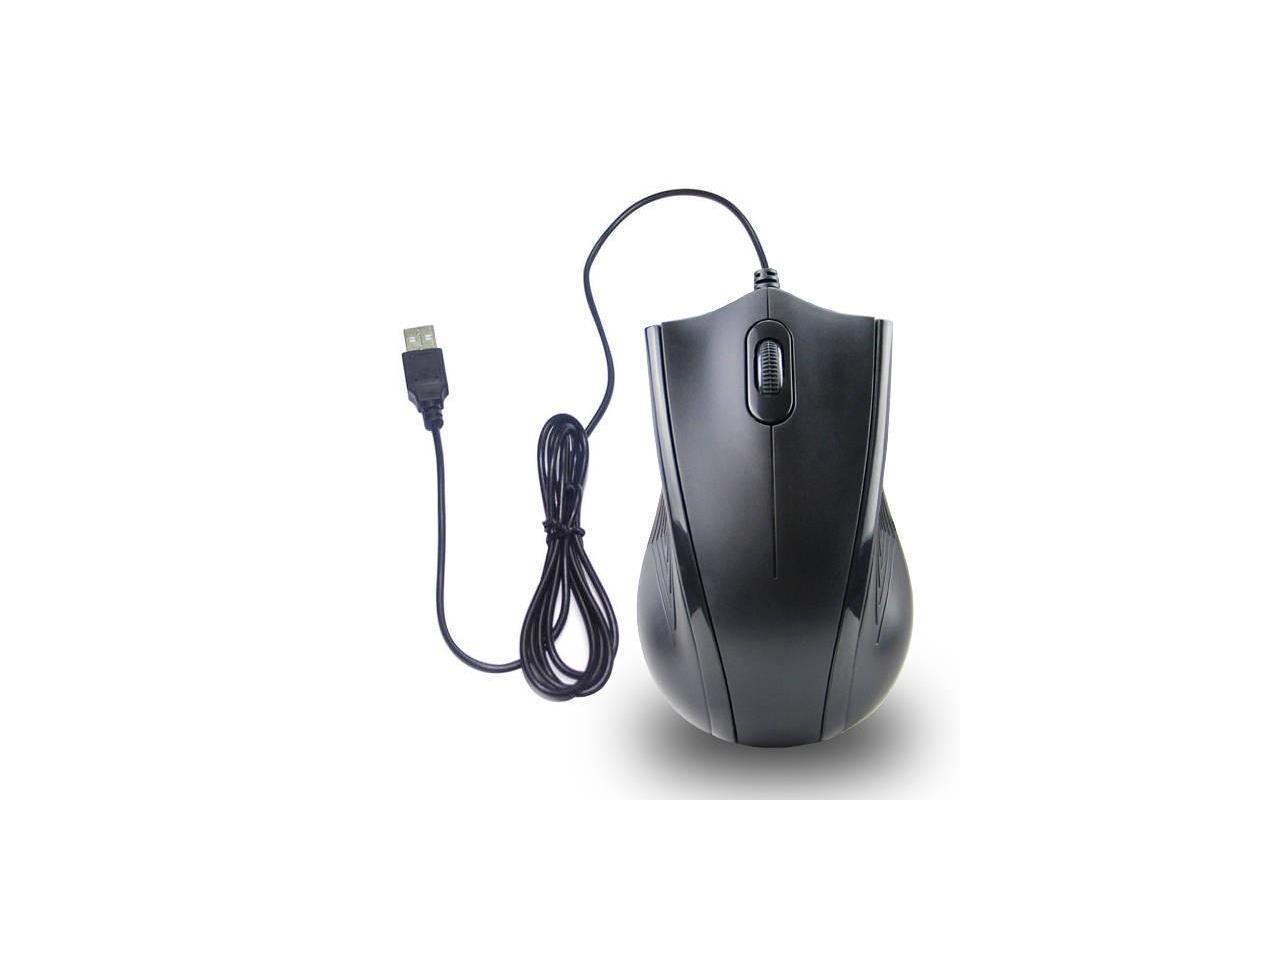 Imicro Mo-m128mi Wired USB Optical Mouse Black MO-M128MI